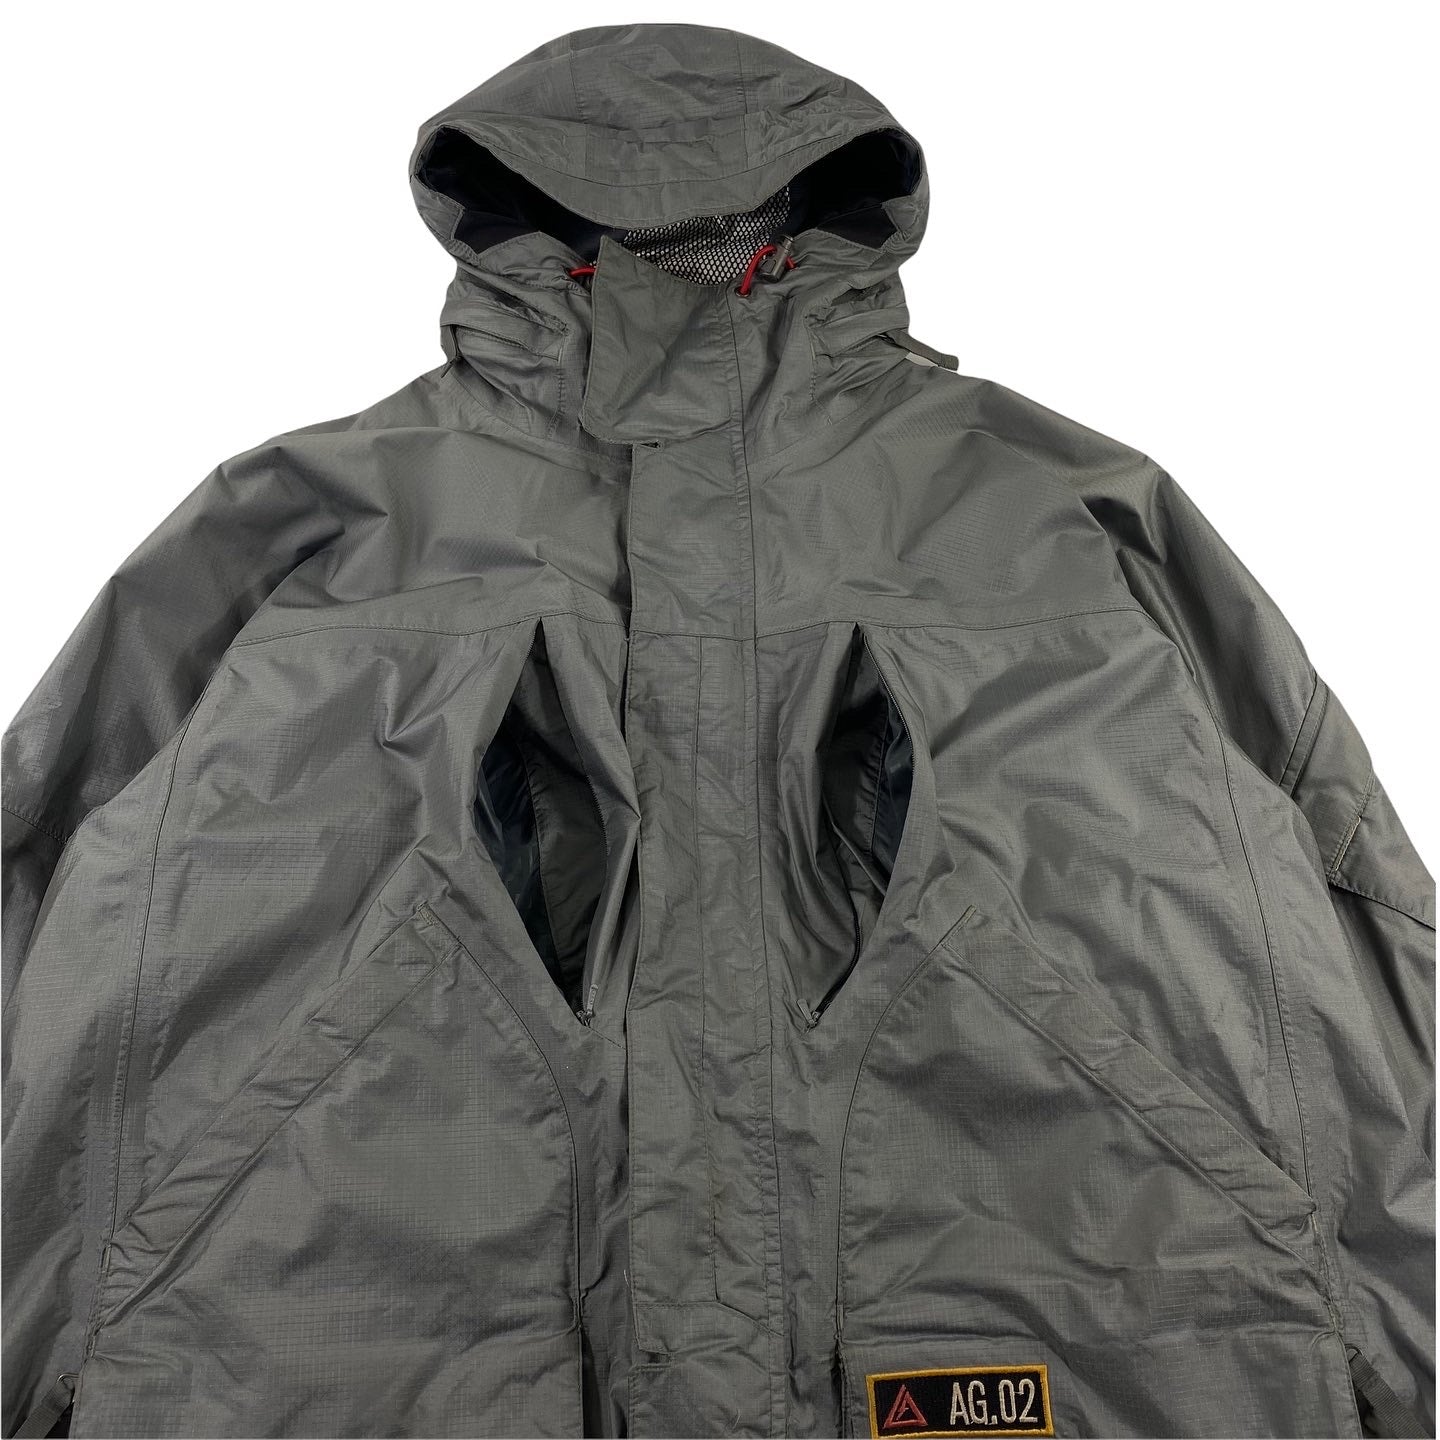 Burton Analog Zeon jacket XL